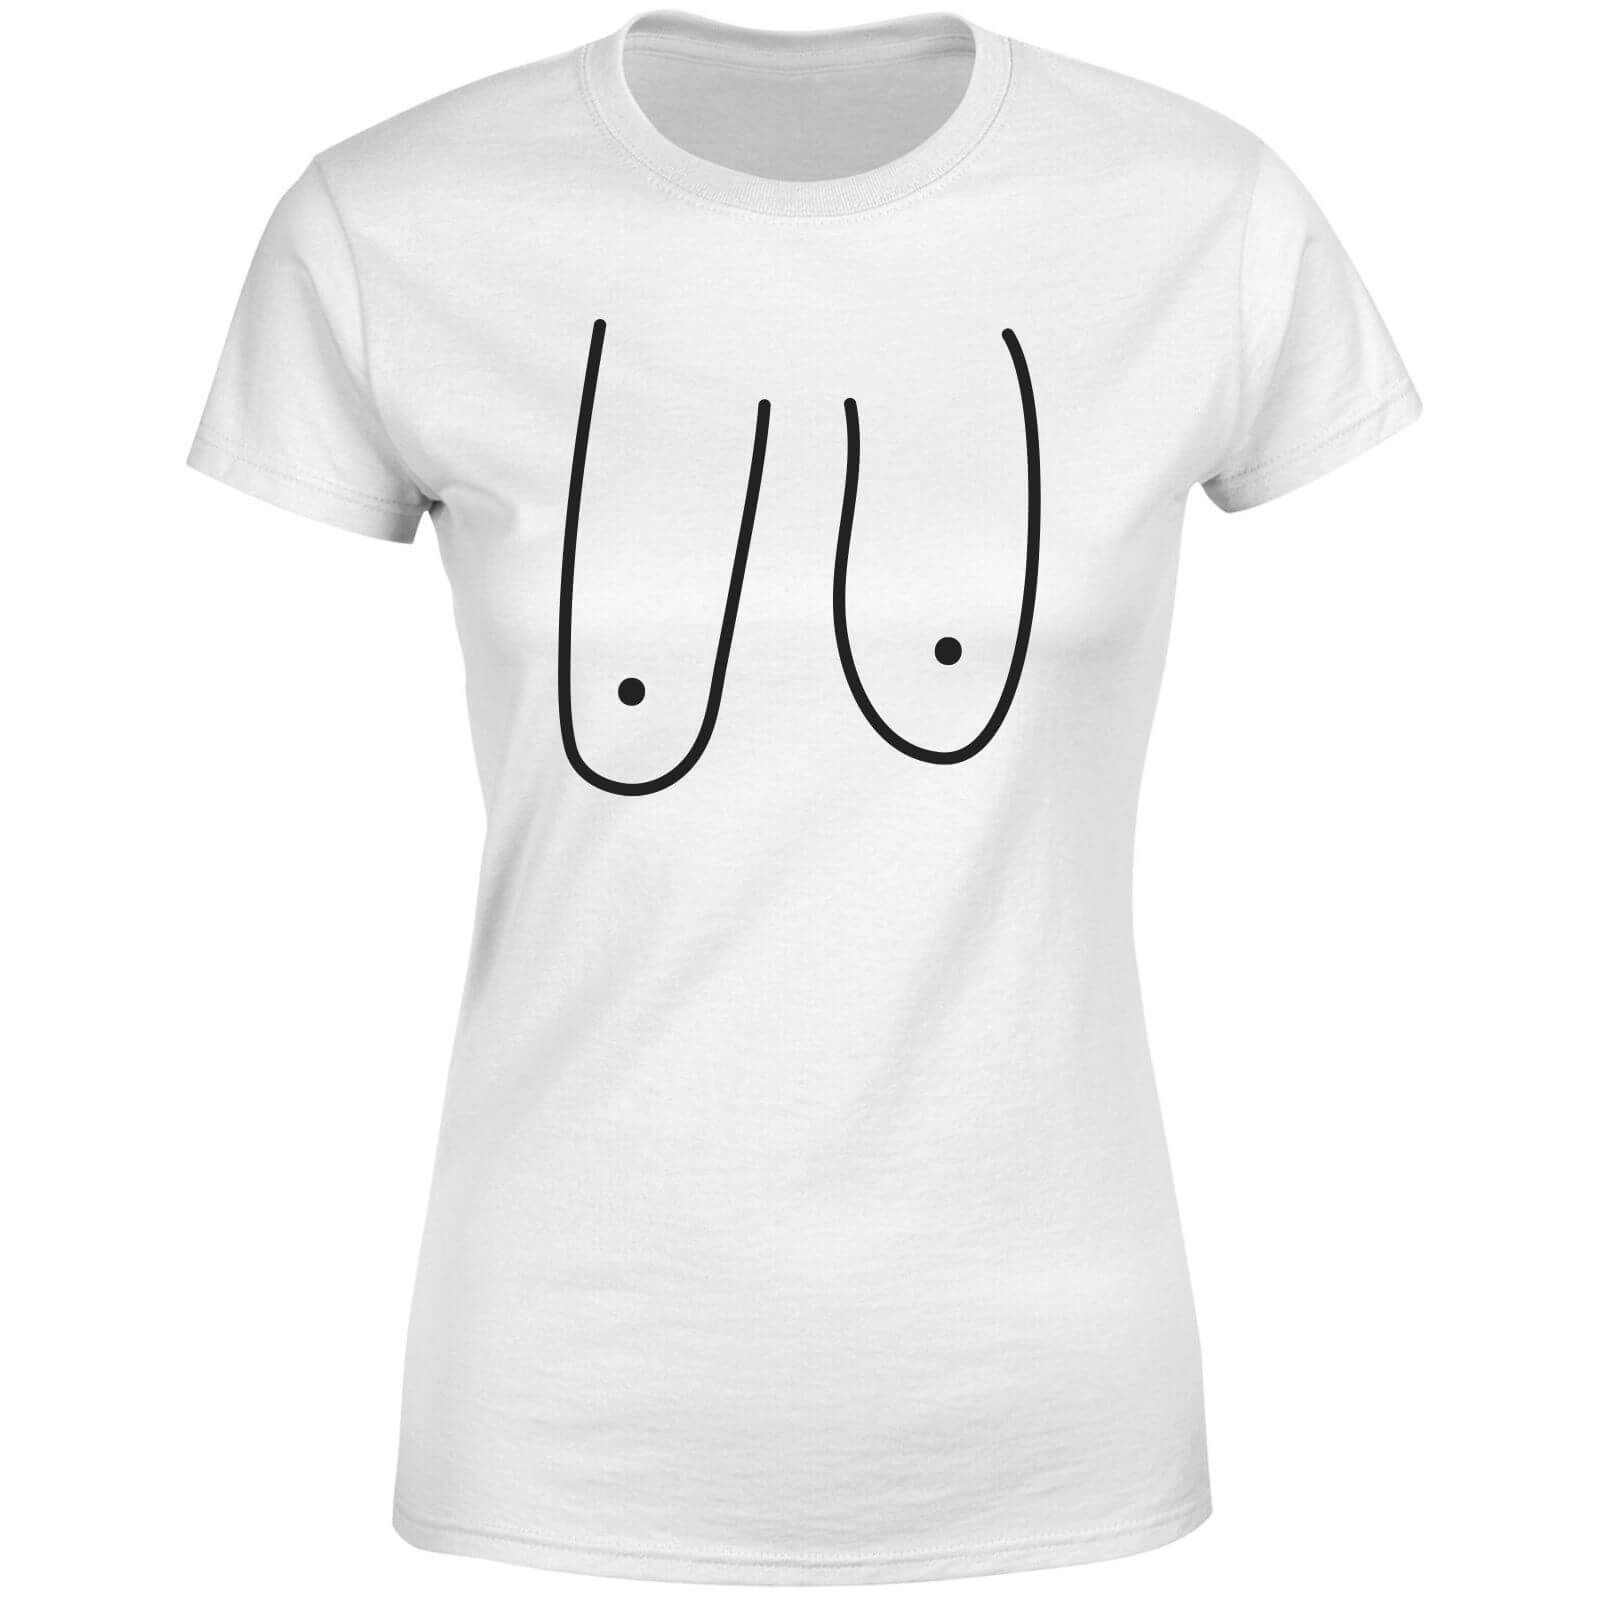 Droopy Knockers Women's T-Shirt - White - XS - White